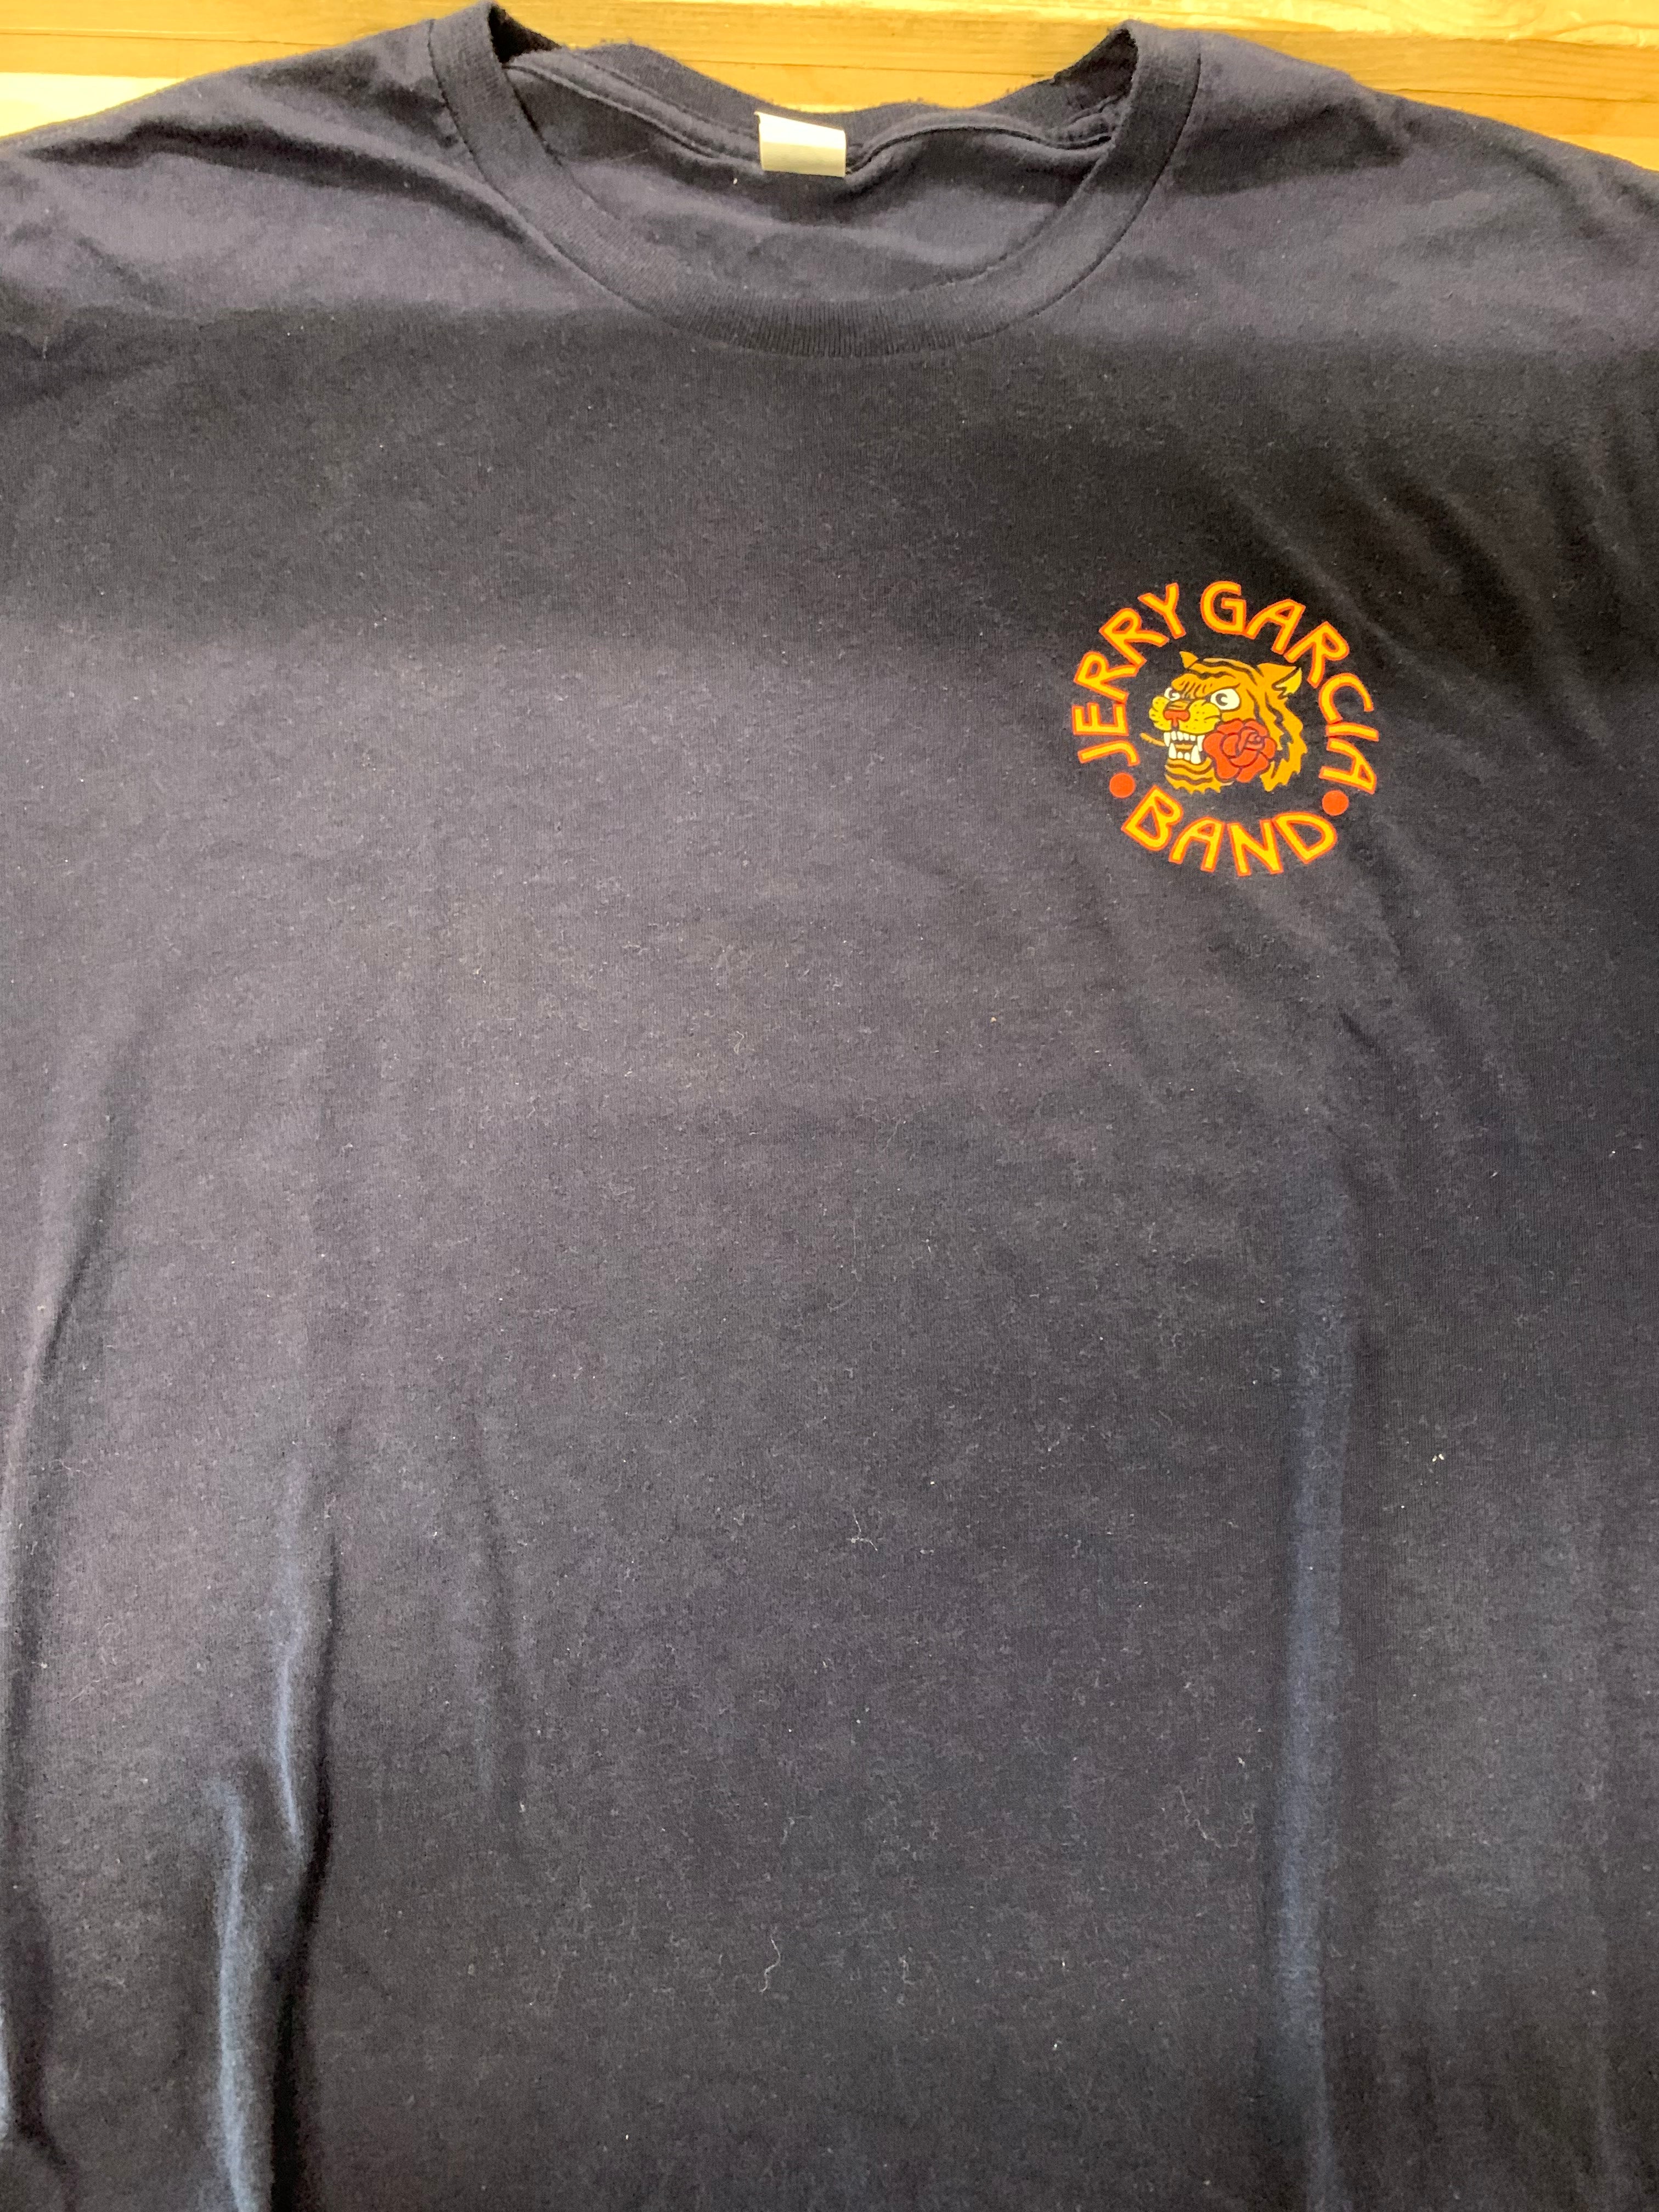 Jerry Garcia Band Logo T-Shirt, Navy, L